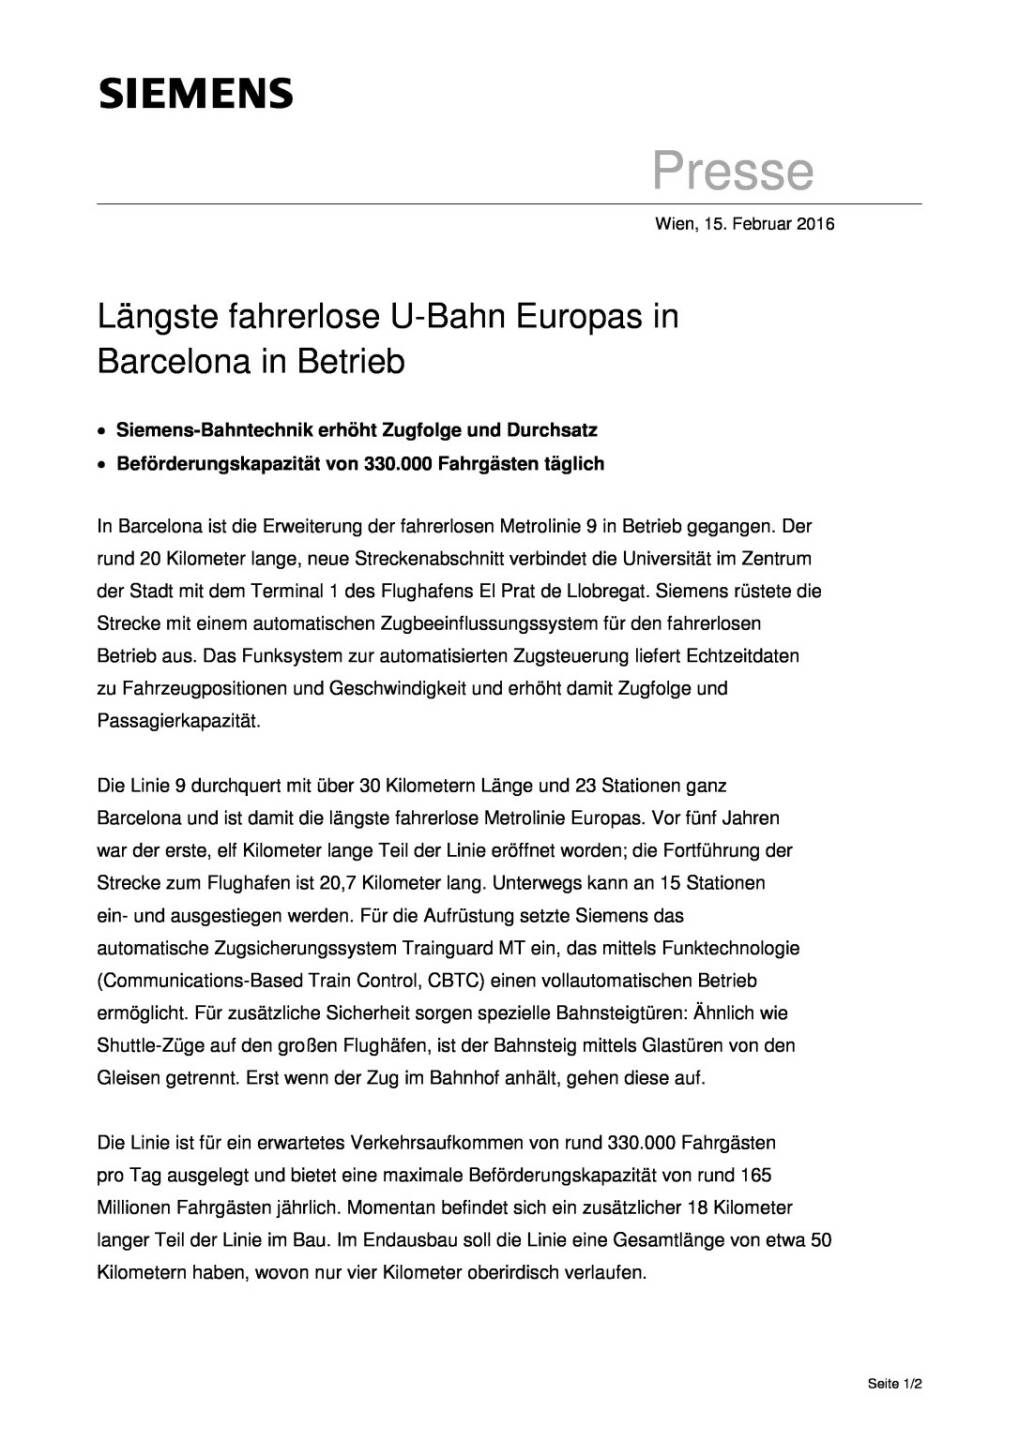  Längste fahrerlose U-Bahn Europas in Barcelona in Betrieb, Seite 1/2, komplettes Dokument unter http://boerse-social.com/static/uploads/file_637__langste_fahrerlose_u-bahn_europas_in_barcelona_in_betrieb.pdf